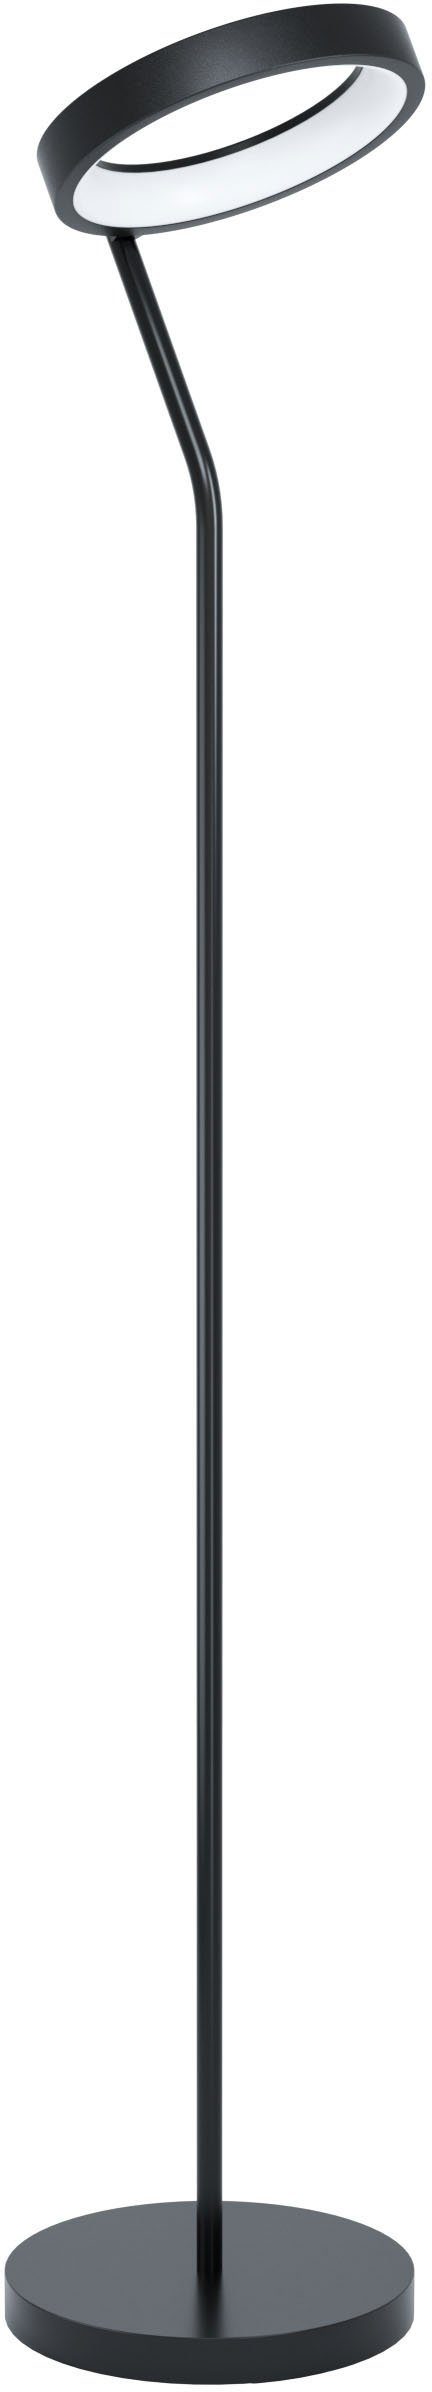 EGLO Stehlampe MARGHERA-Z, LED fest aus - warmweiß integriert, warmweiß - Stahl kaltweiß kaltweiß, schwarz - 4X4W in Stehleuchte 